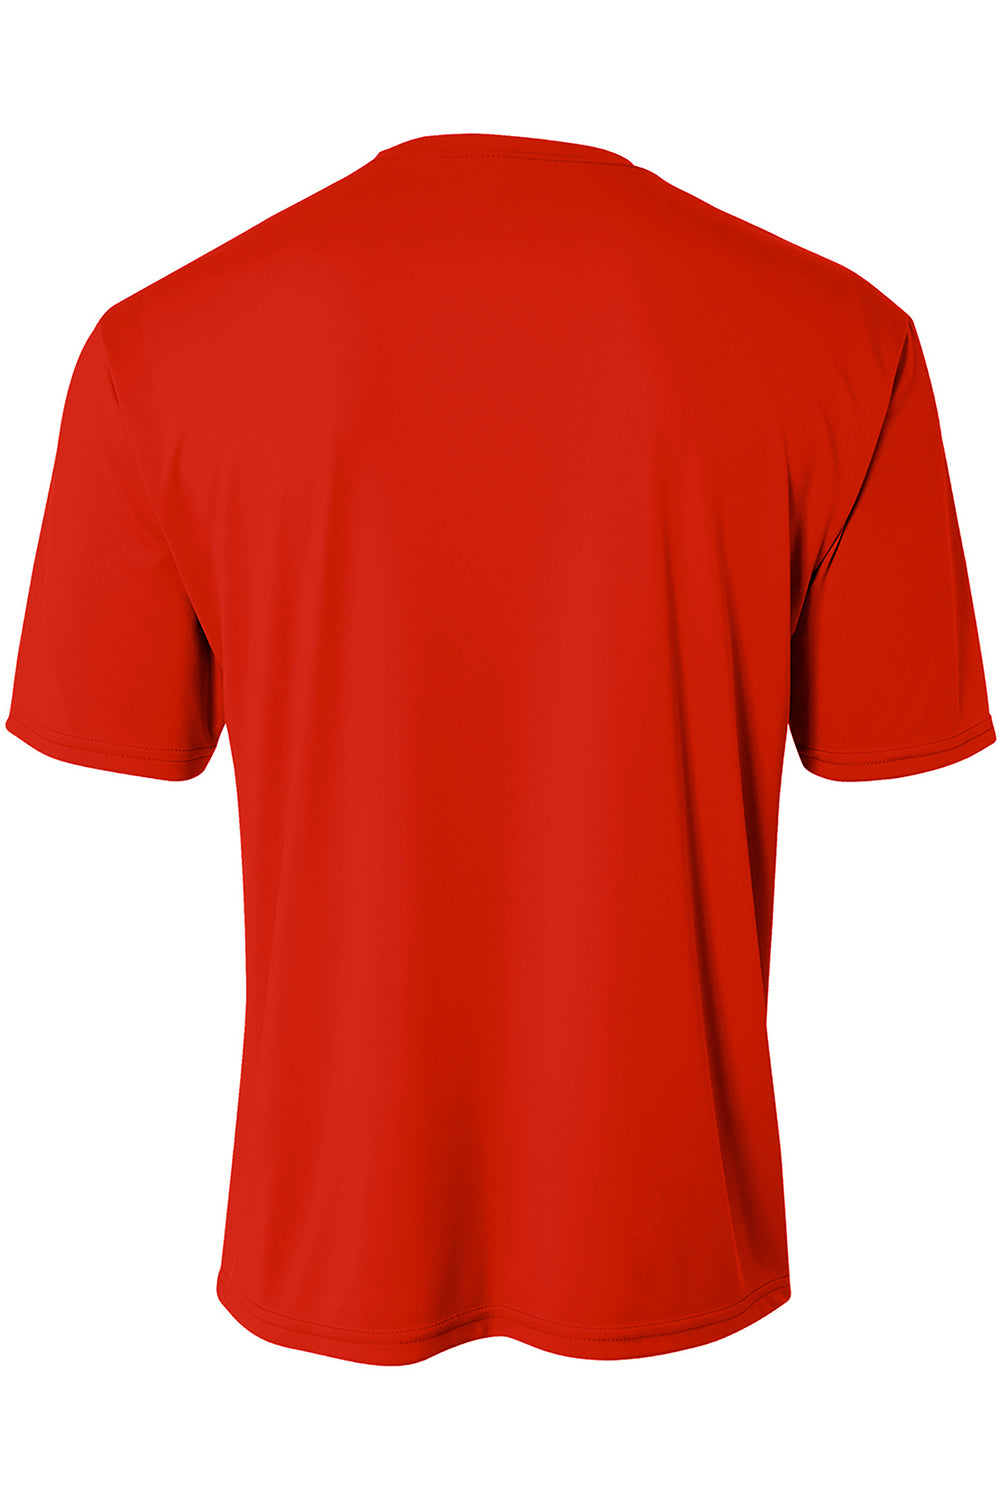 A4 N3402 Mens Sprint Performance Moisture Wicking Short Sleeve Crewneck T-Shirt Scarlet Red Flat Back